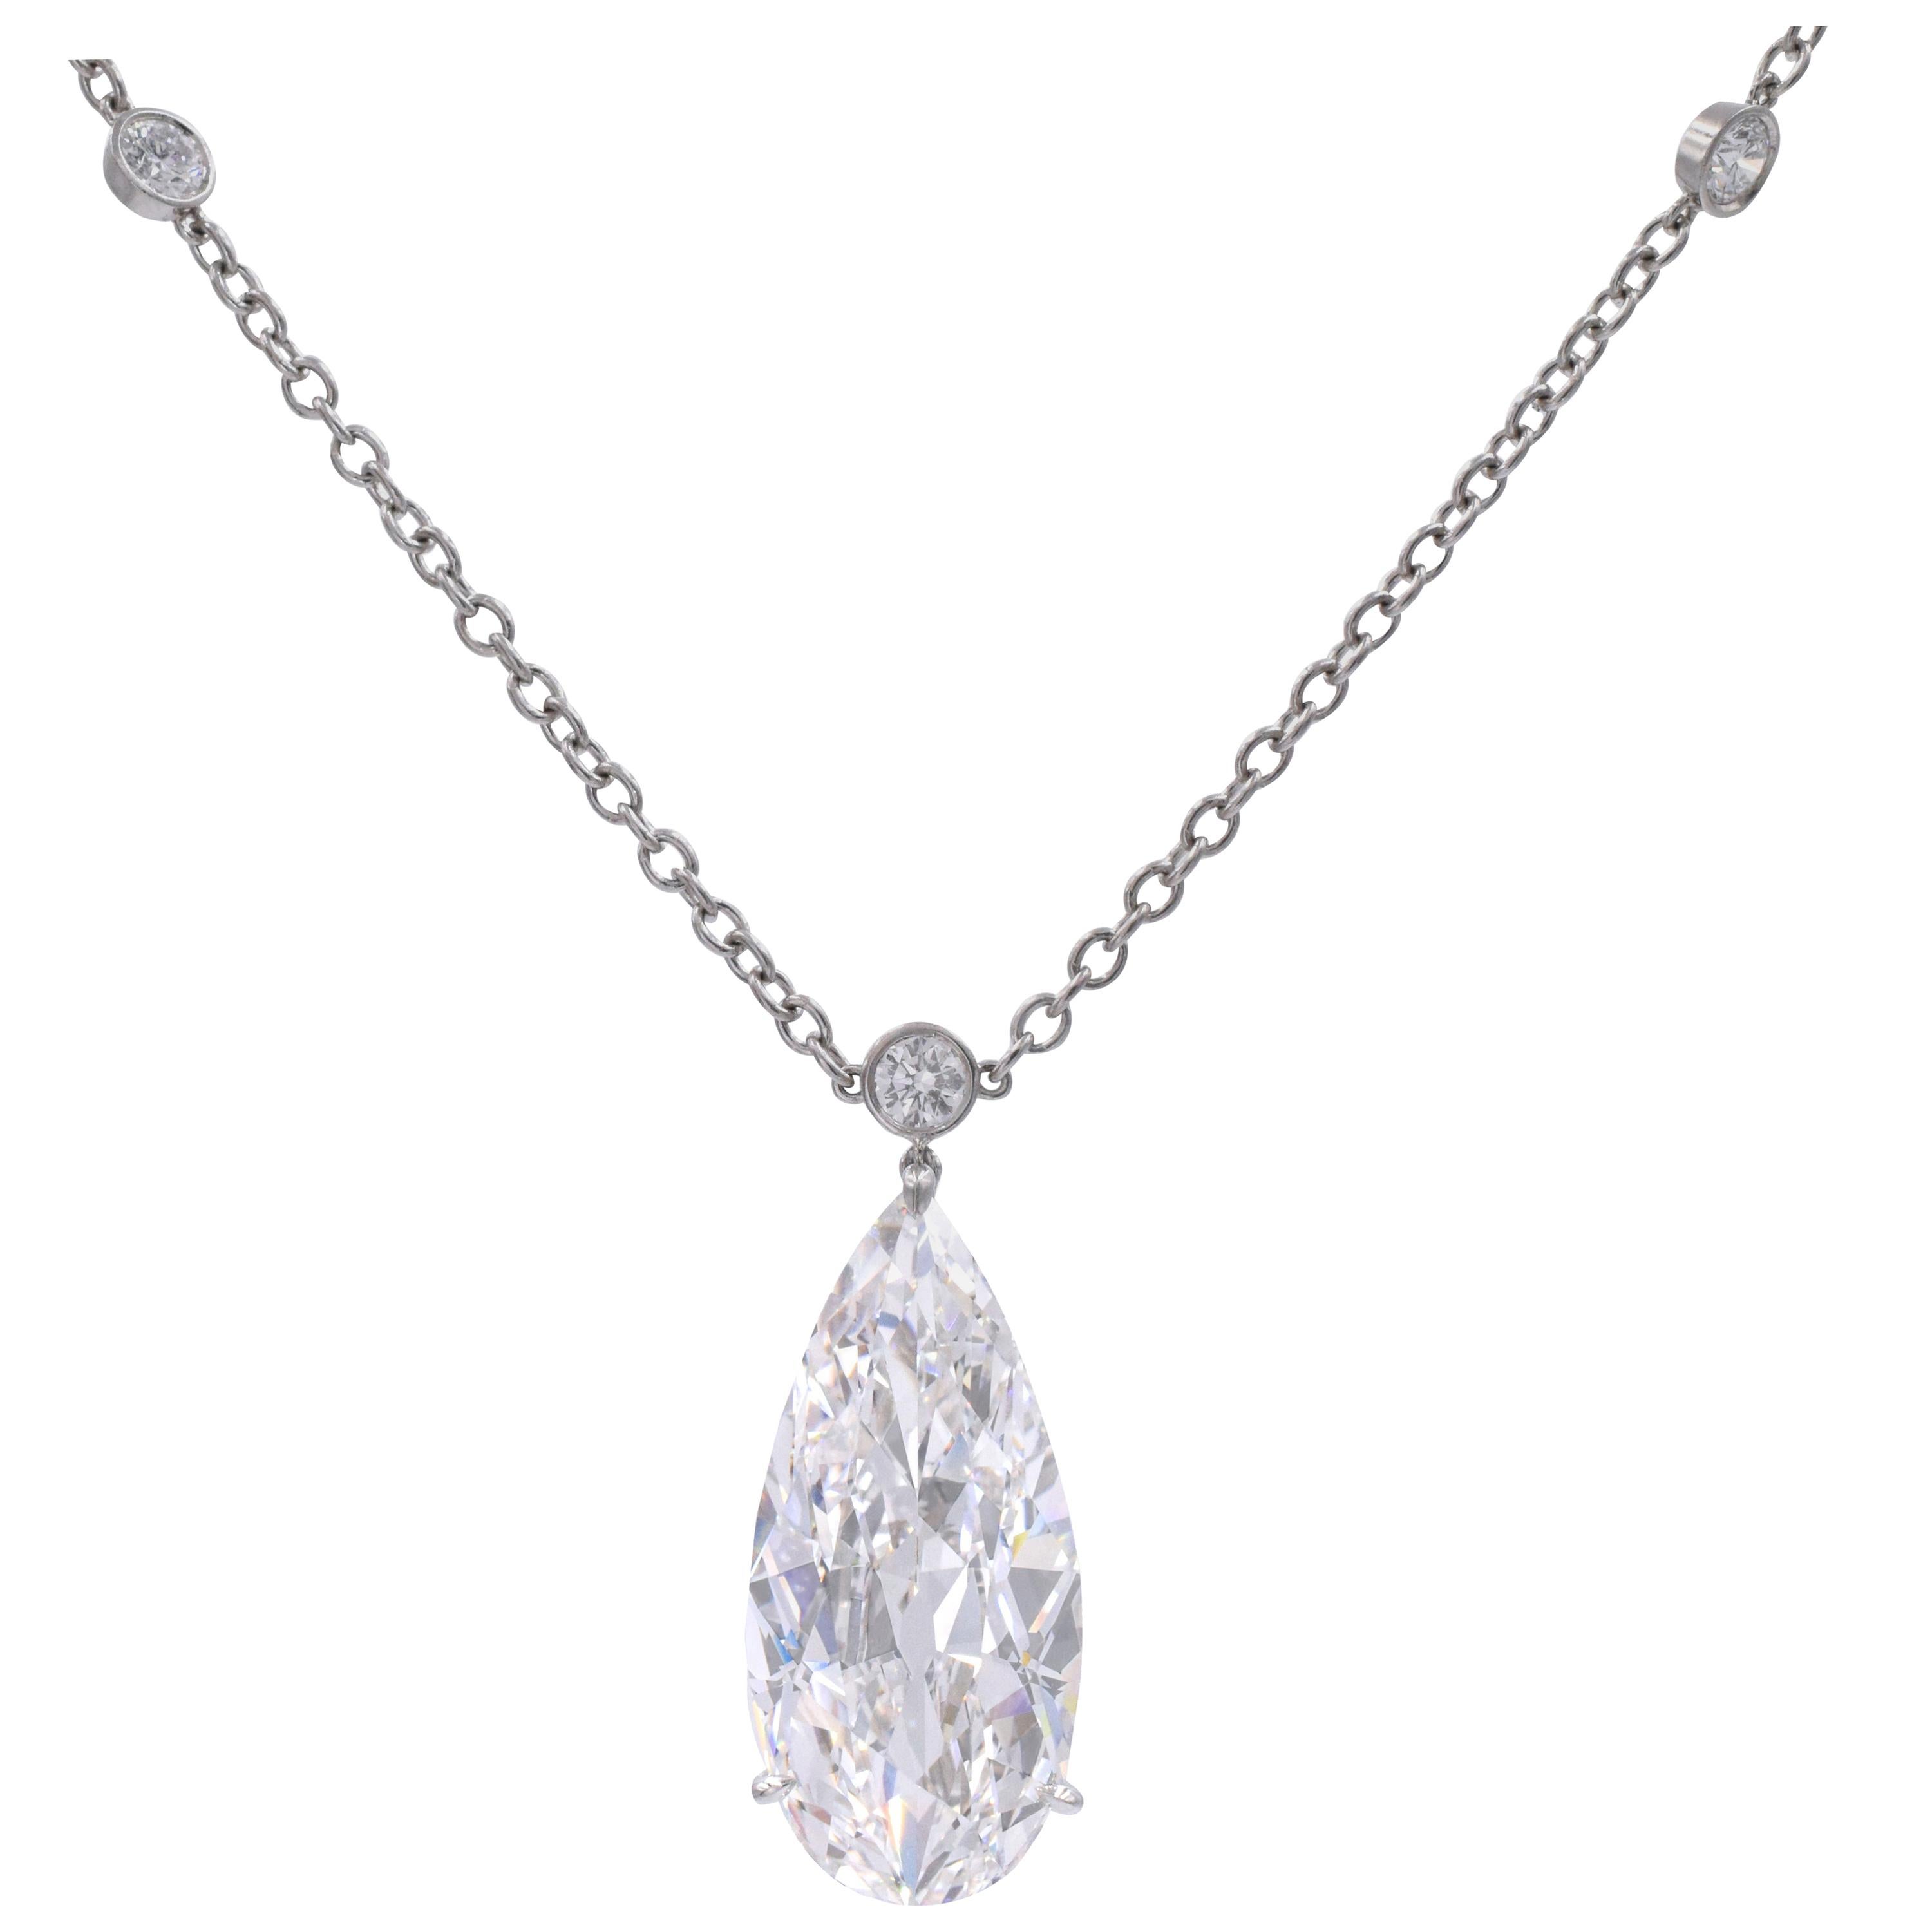 Harry Winston D Color IF Clarity GIA Certified Diamond Pendant/Necklace